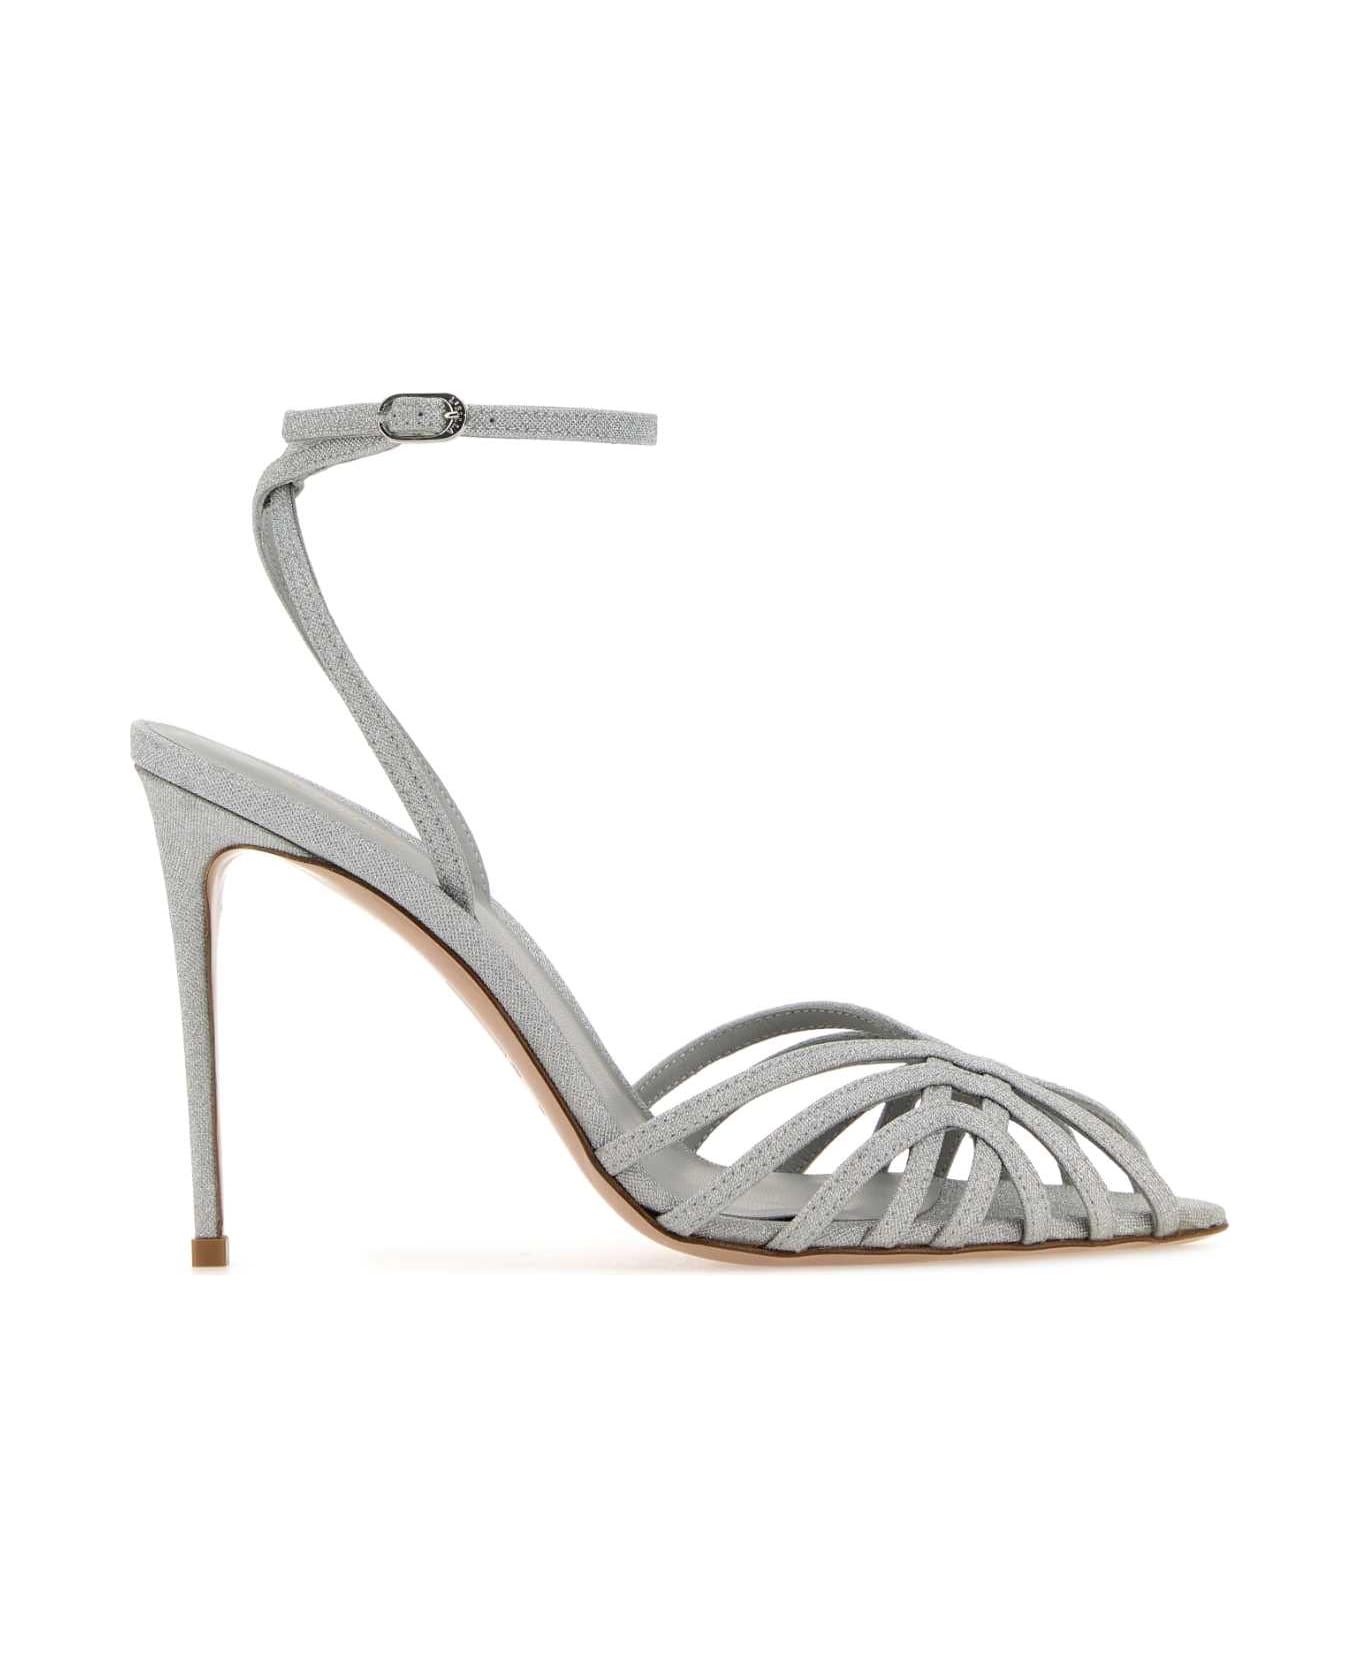 Le Silla Silver Fabric Embrace Sandals - ARGENTO